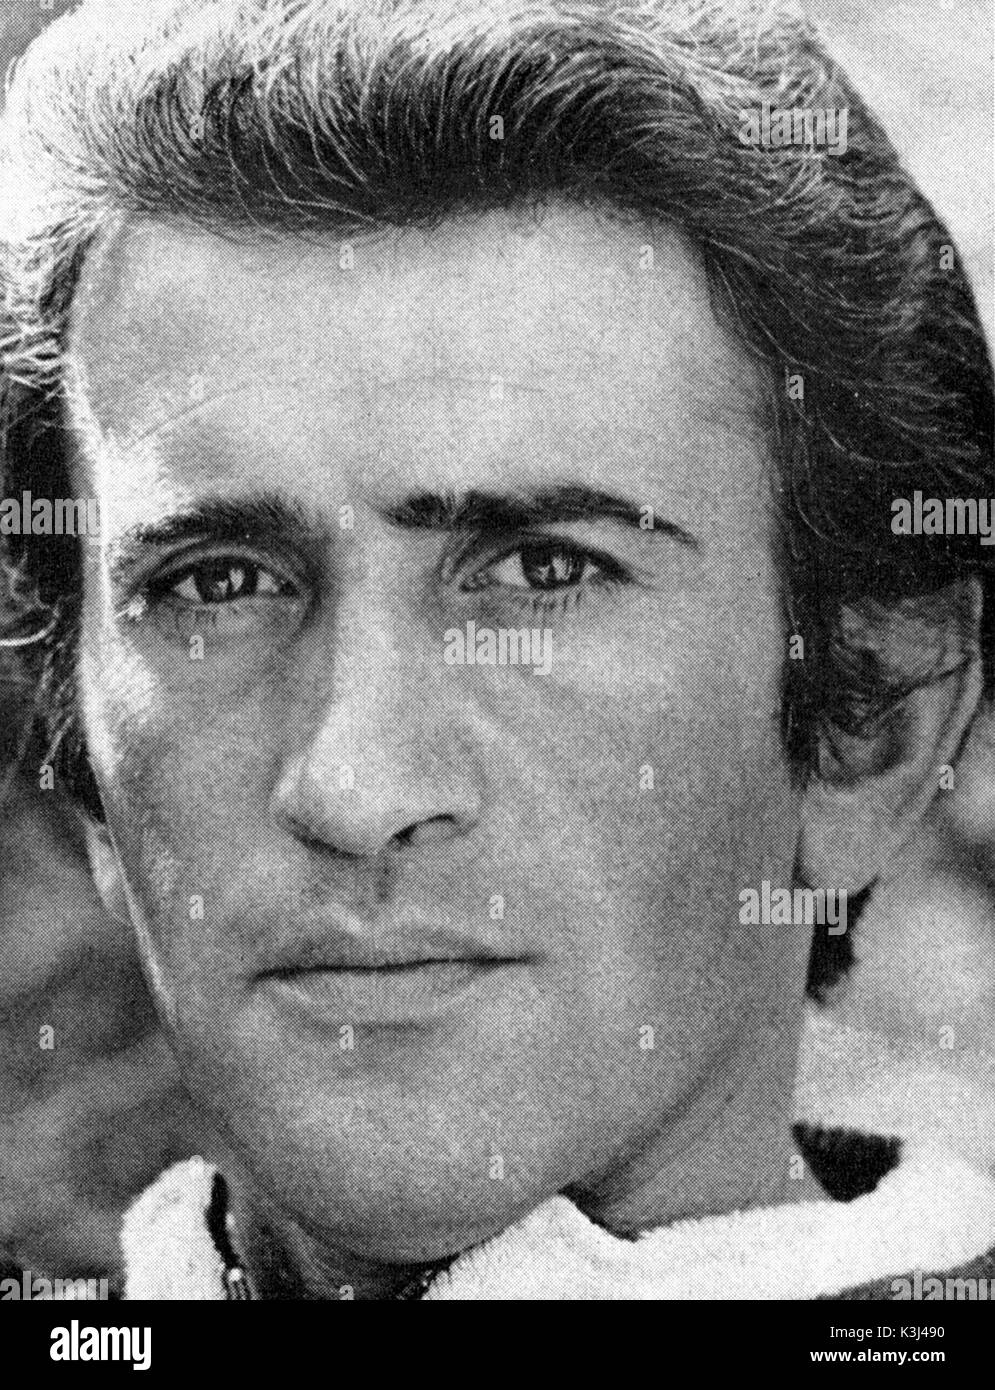 AL MANCINI amerikanischer Schauspieler, ca. 1975 Stockfoto